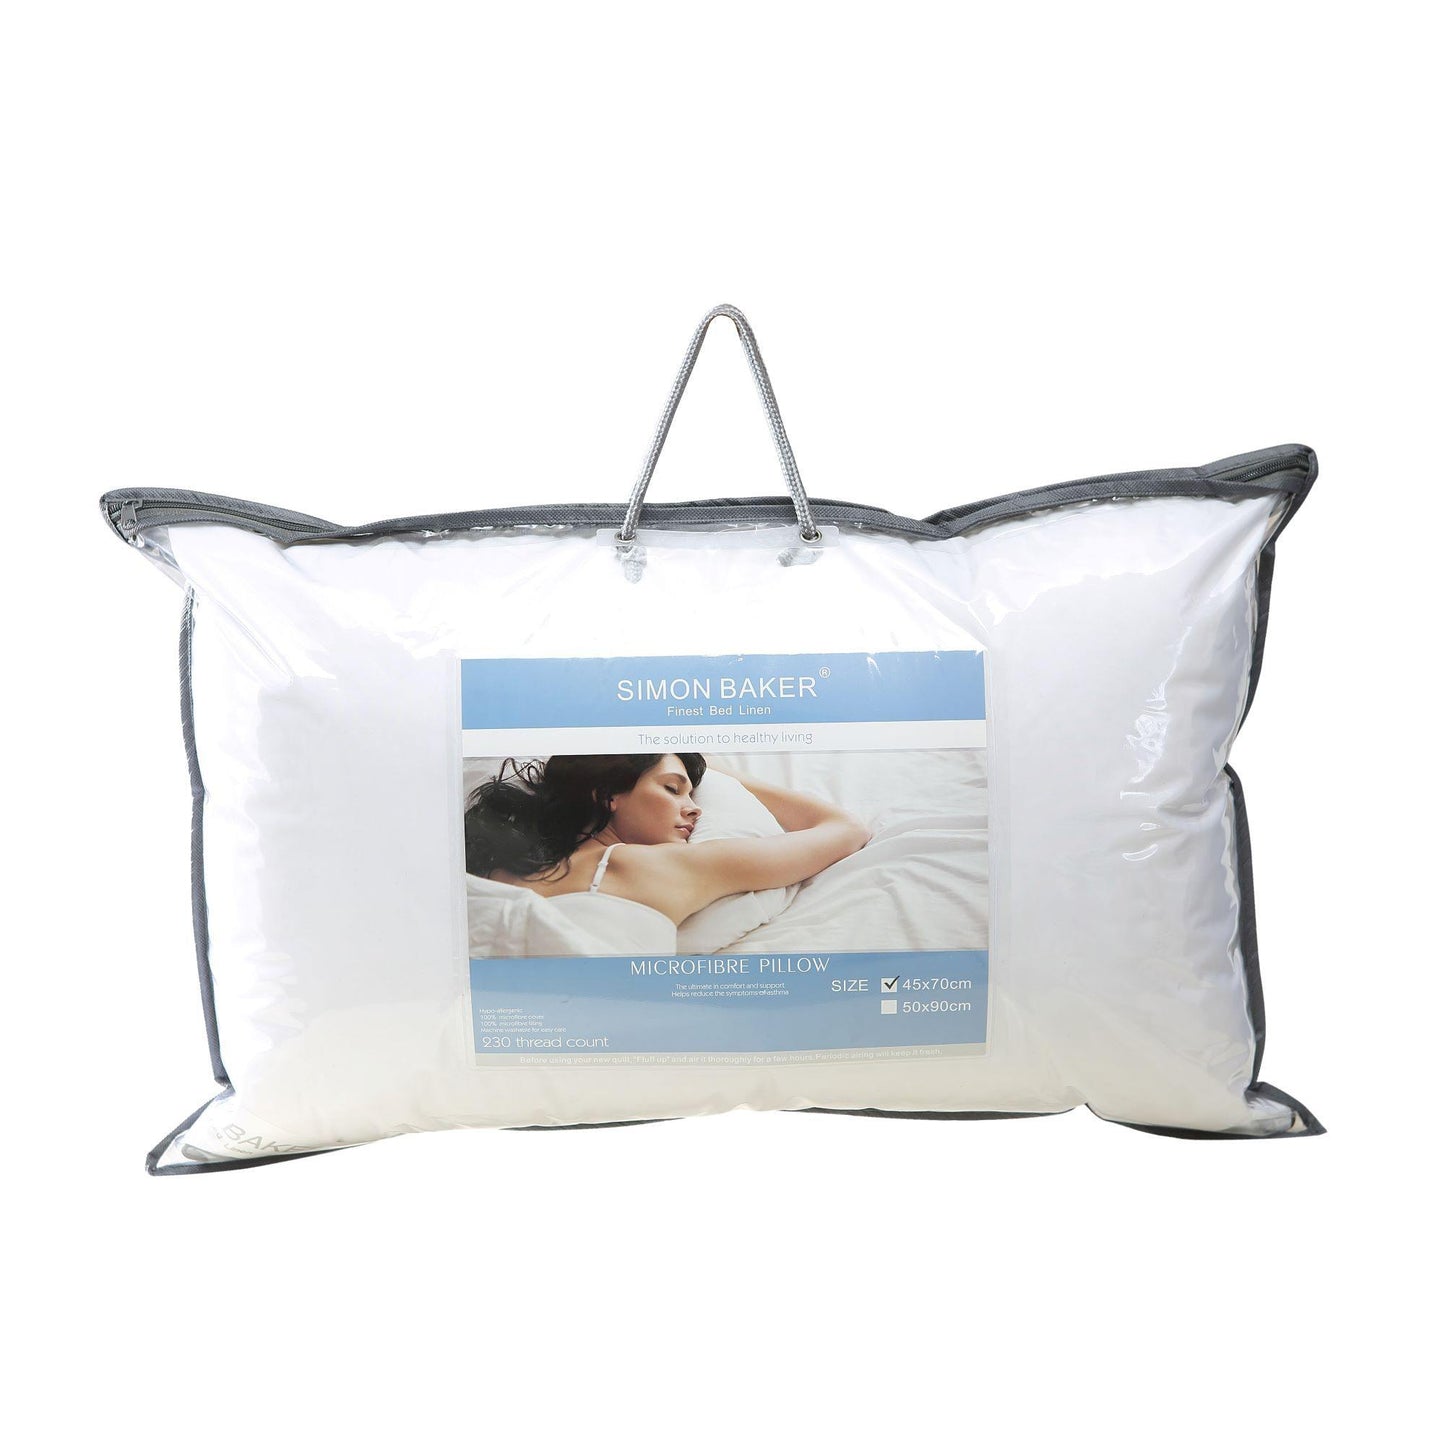 Simon Baker | Microfibre Pillows Inners King